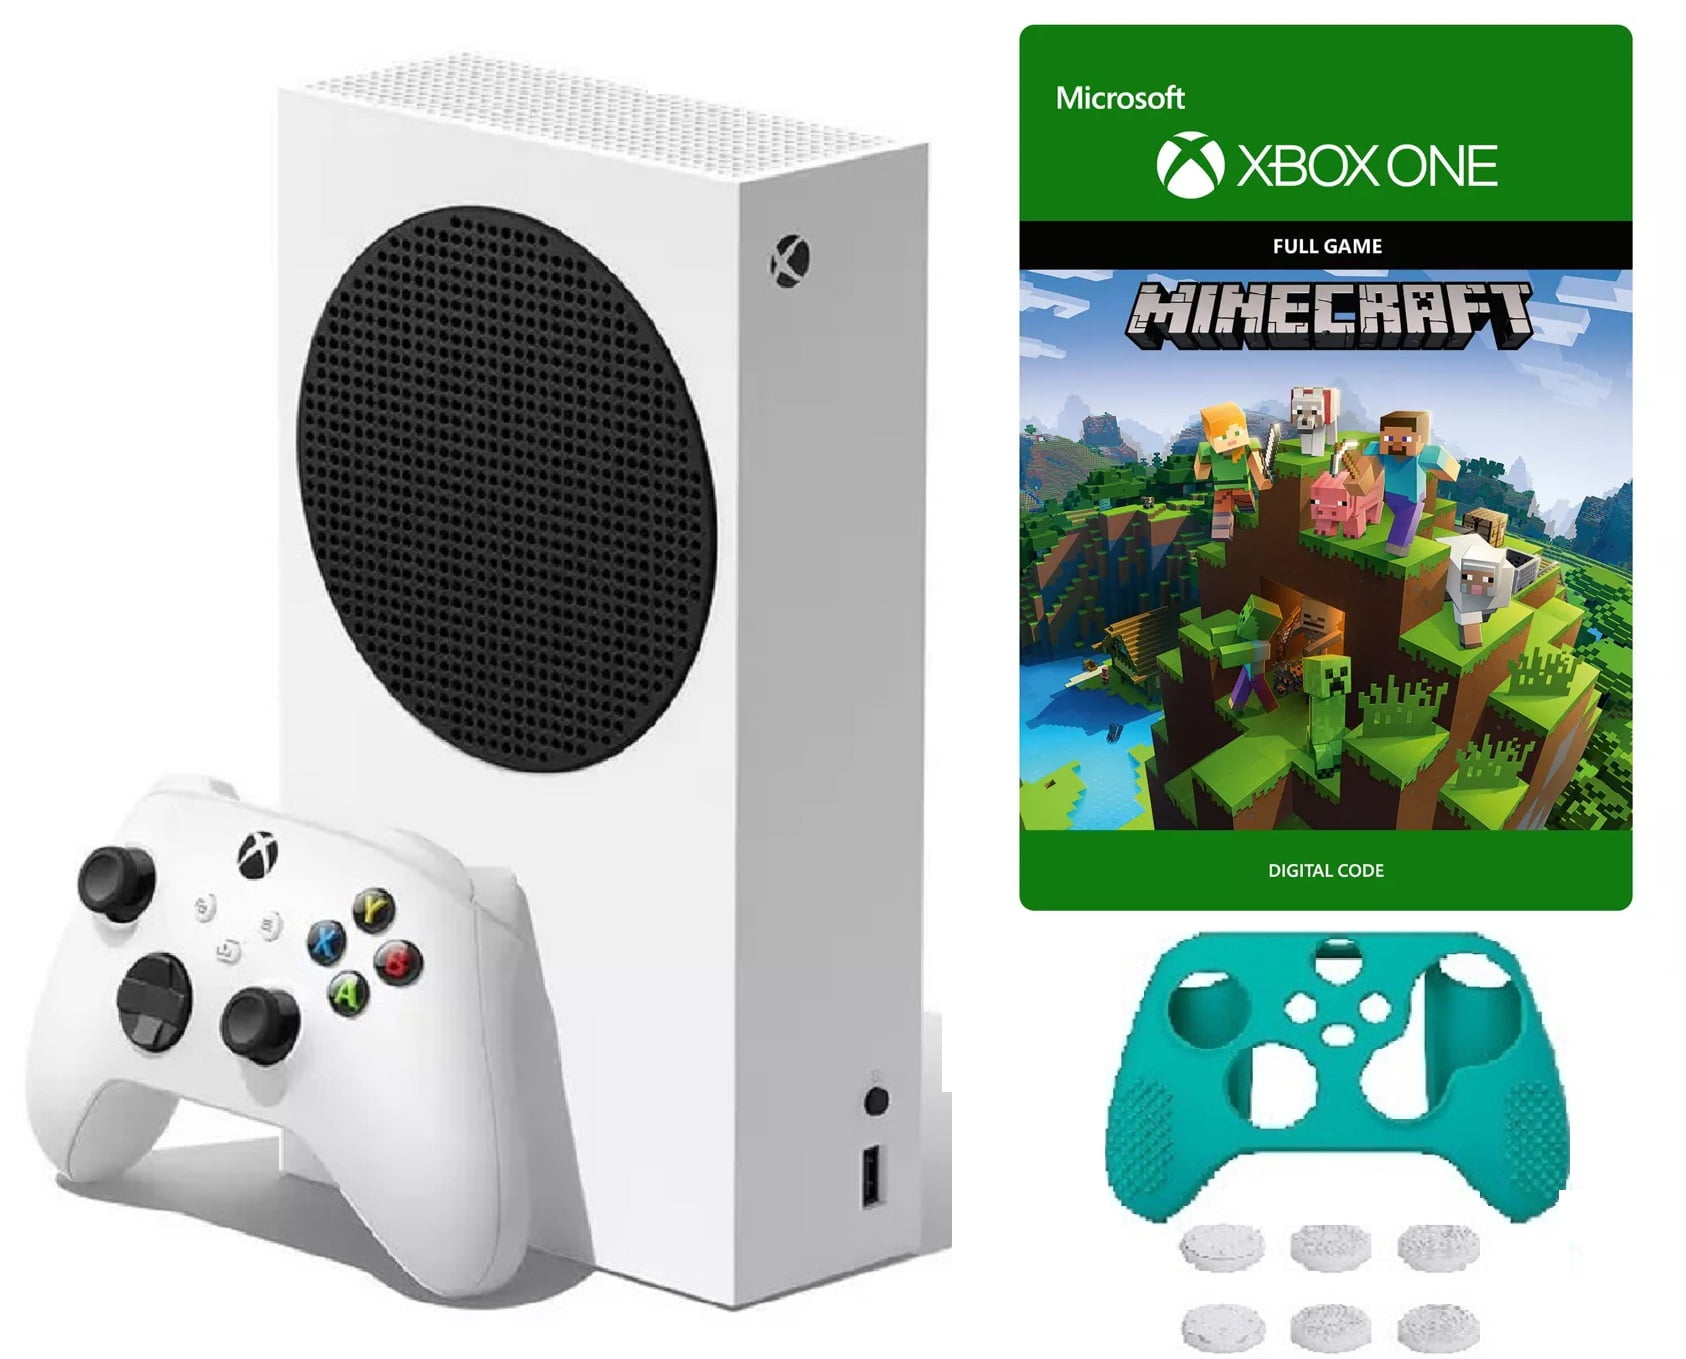  Fortnite Minty Legends Pack - Xbox Series X : U&i  Entertainment: Video Games